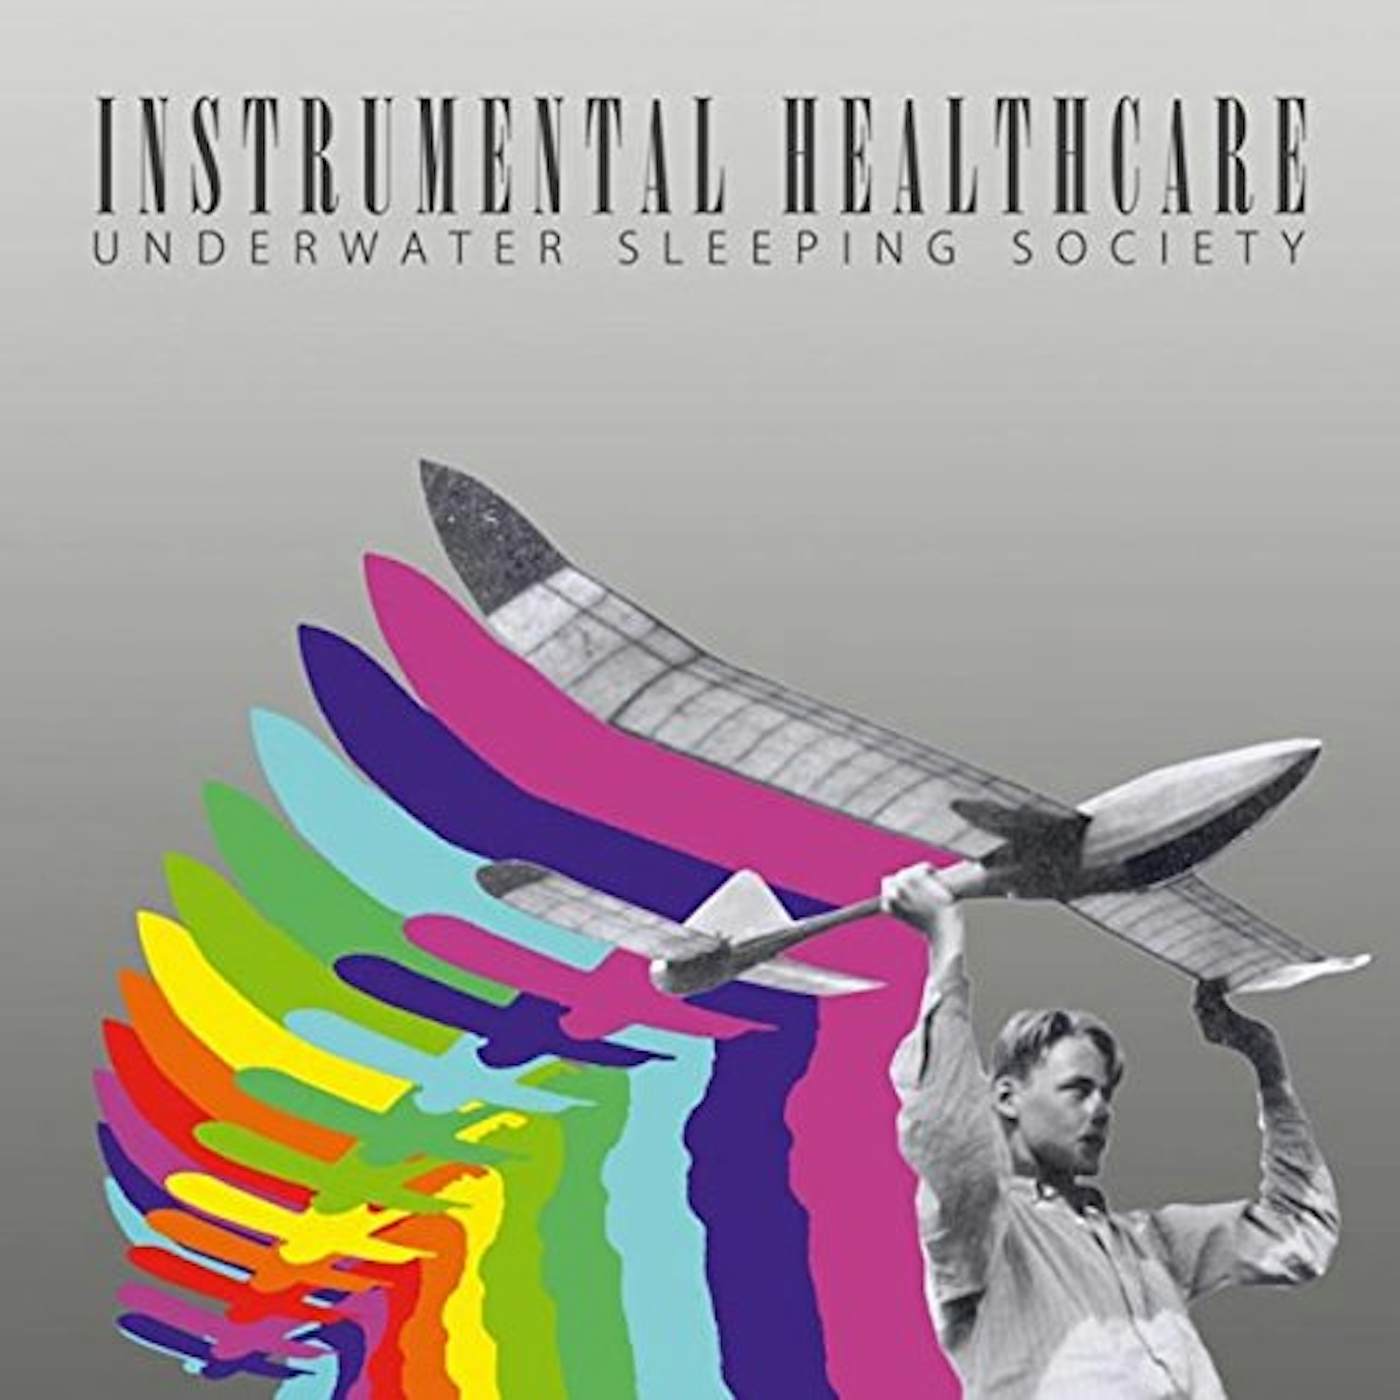 Underwater Sleeping Society Instrumental Healthcare Vinyl Record